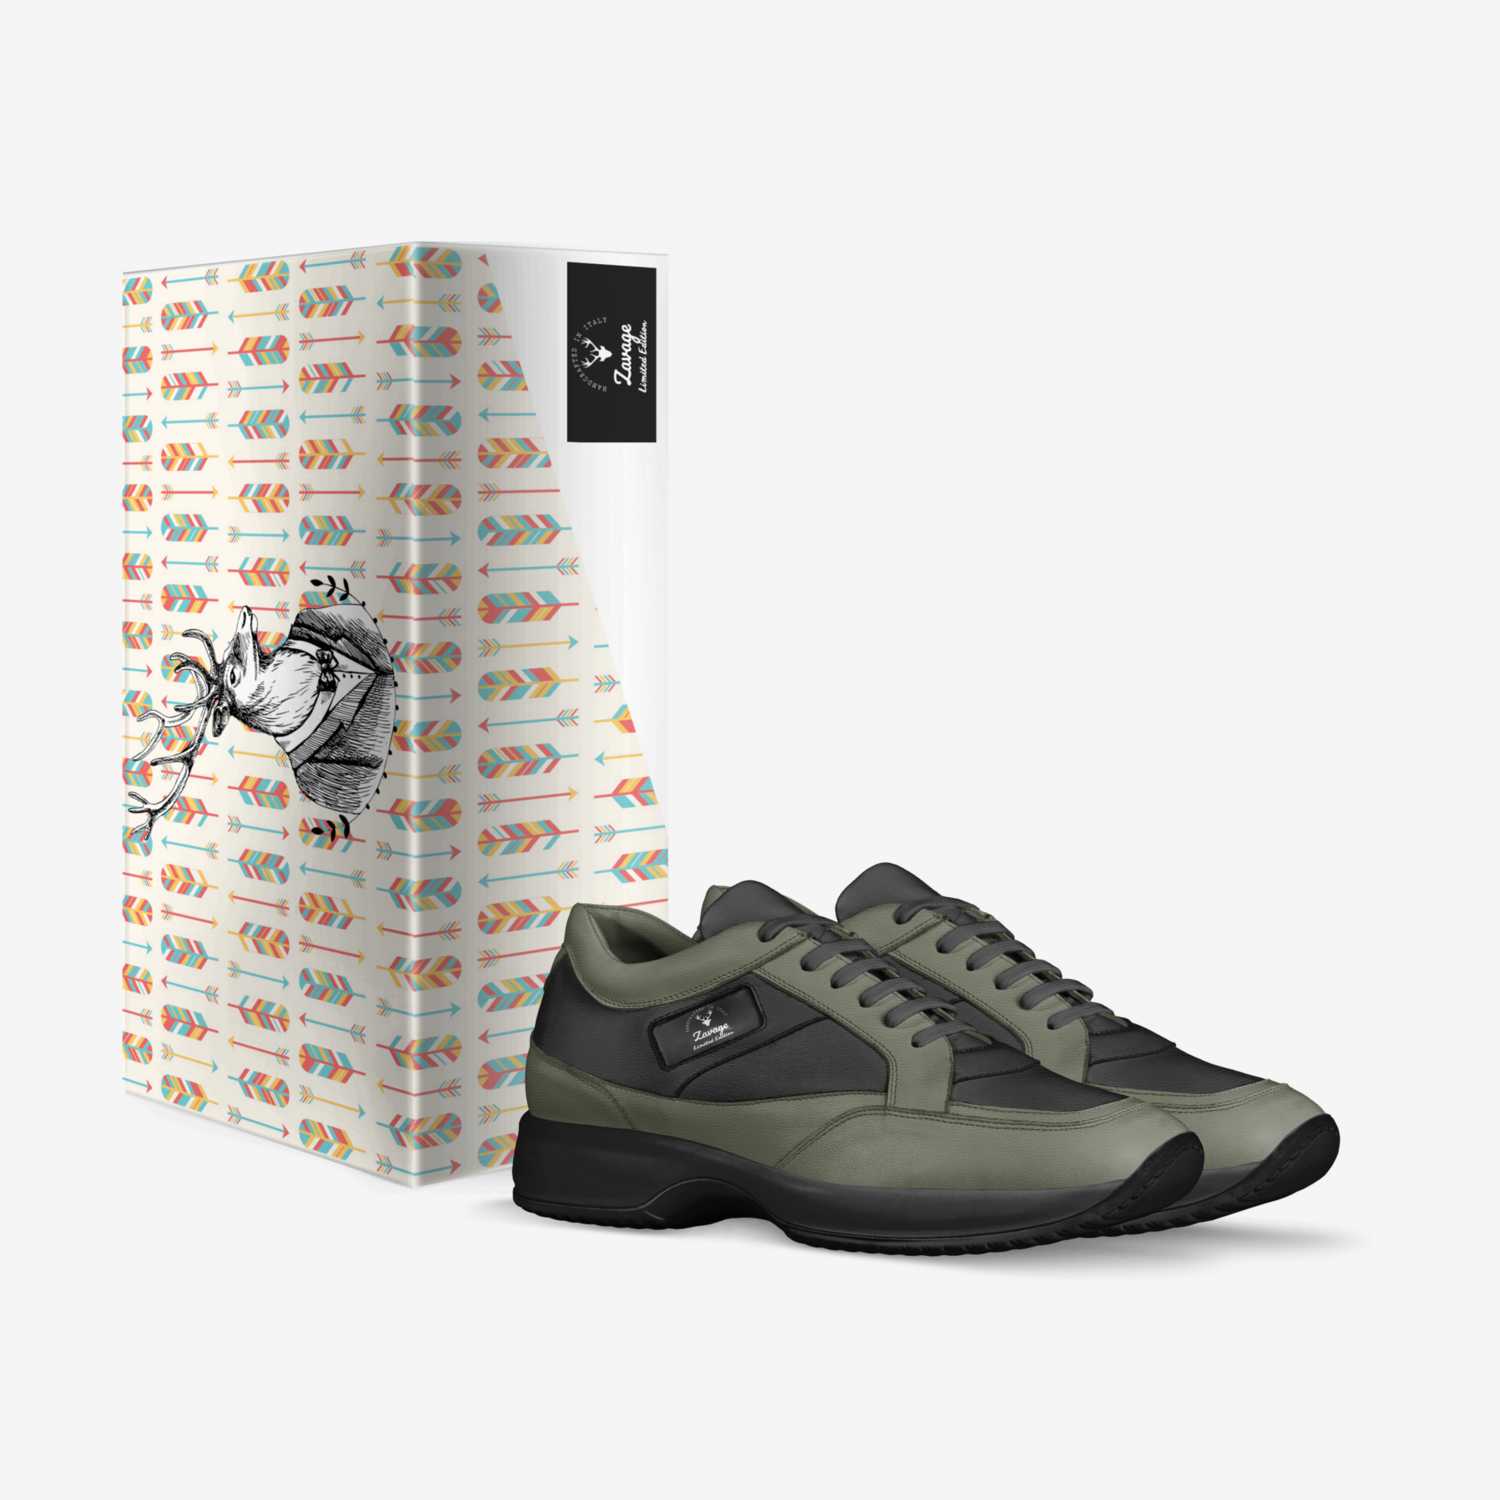 Zavage custom made in Italy shoes by Maaaaa | Box view